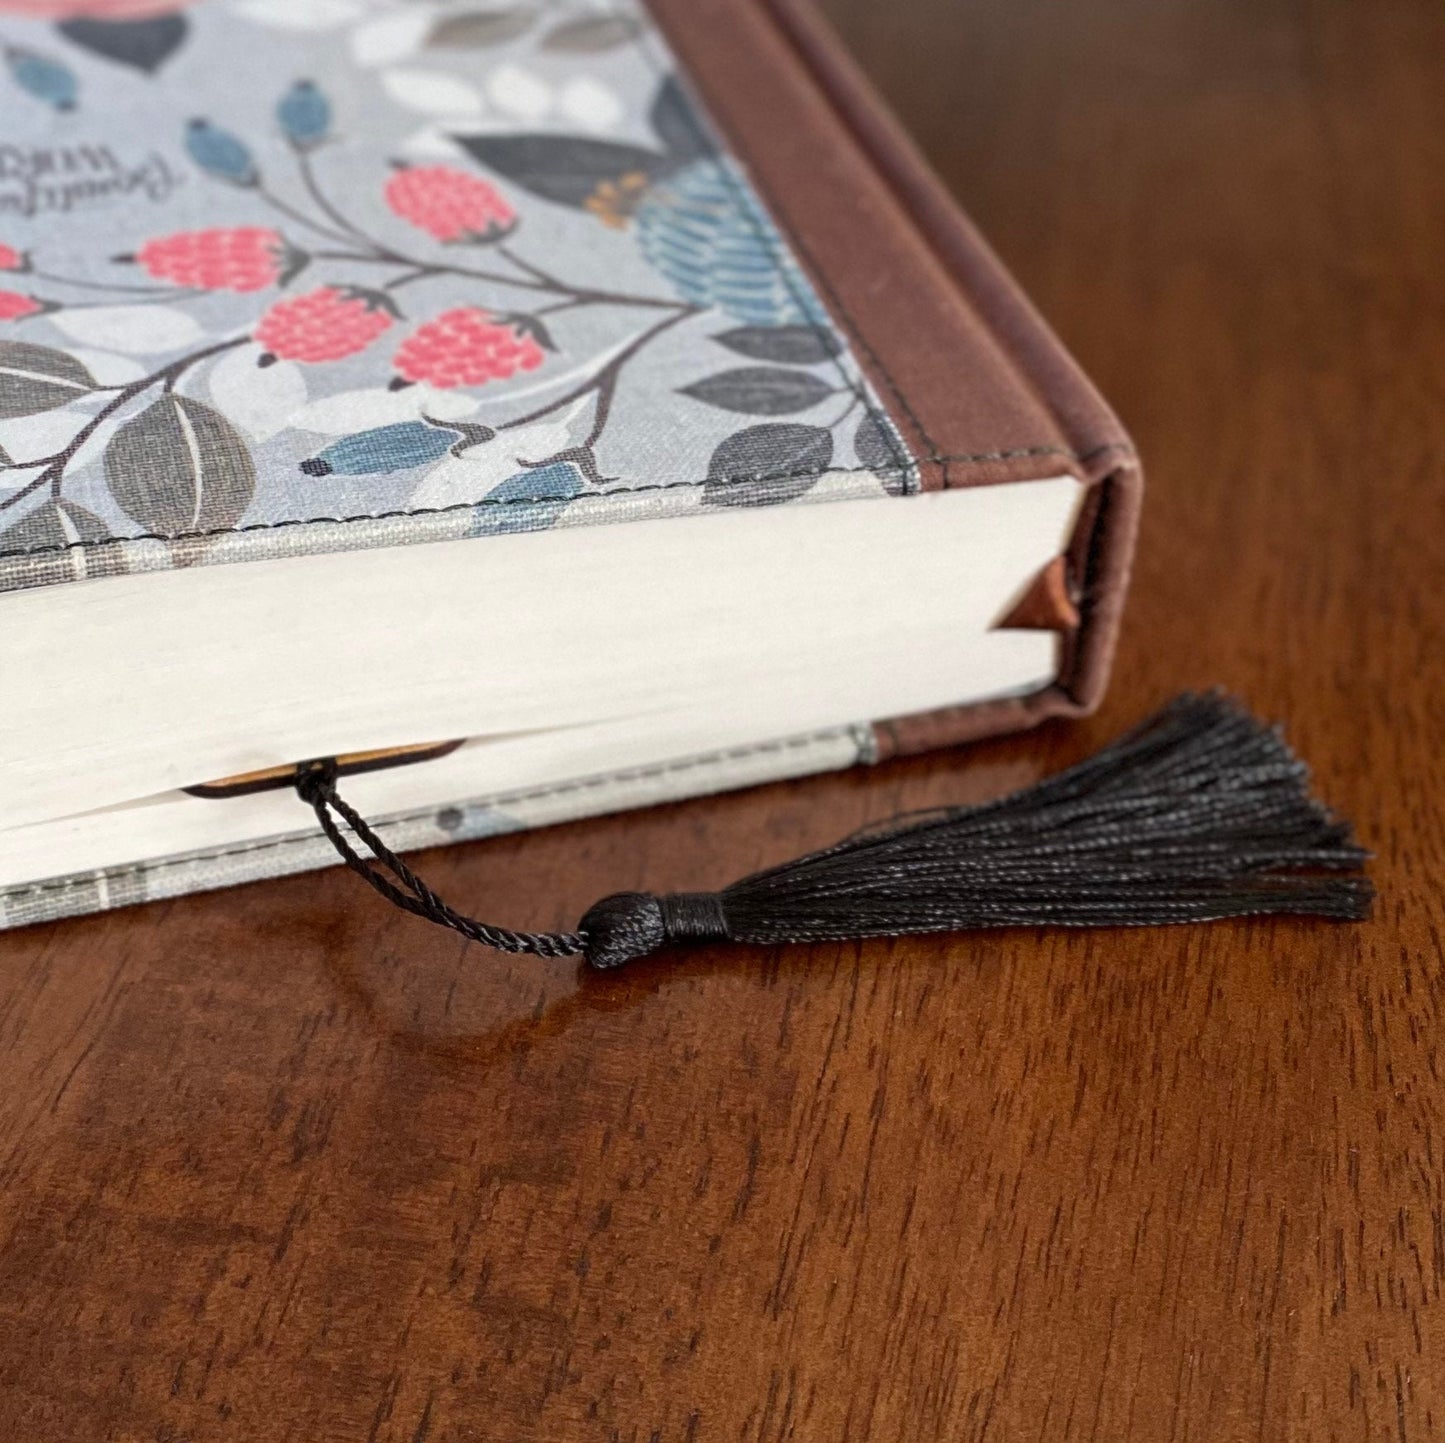 Loon Engraved Wood Bookmark